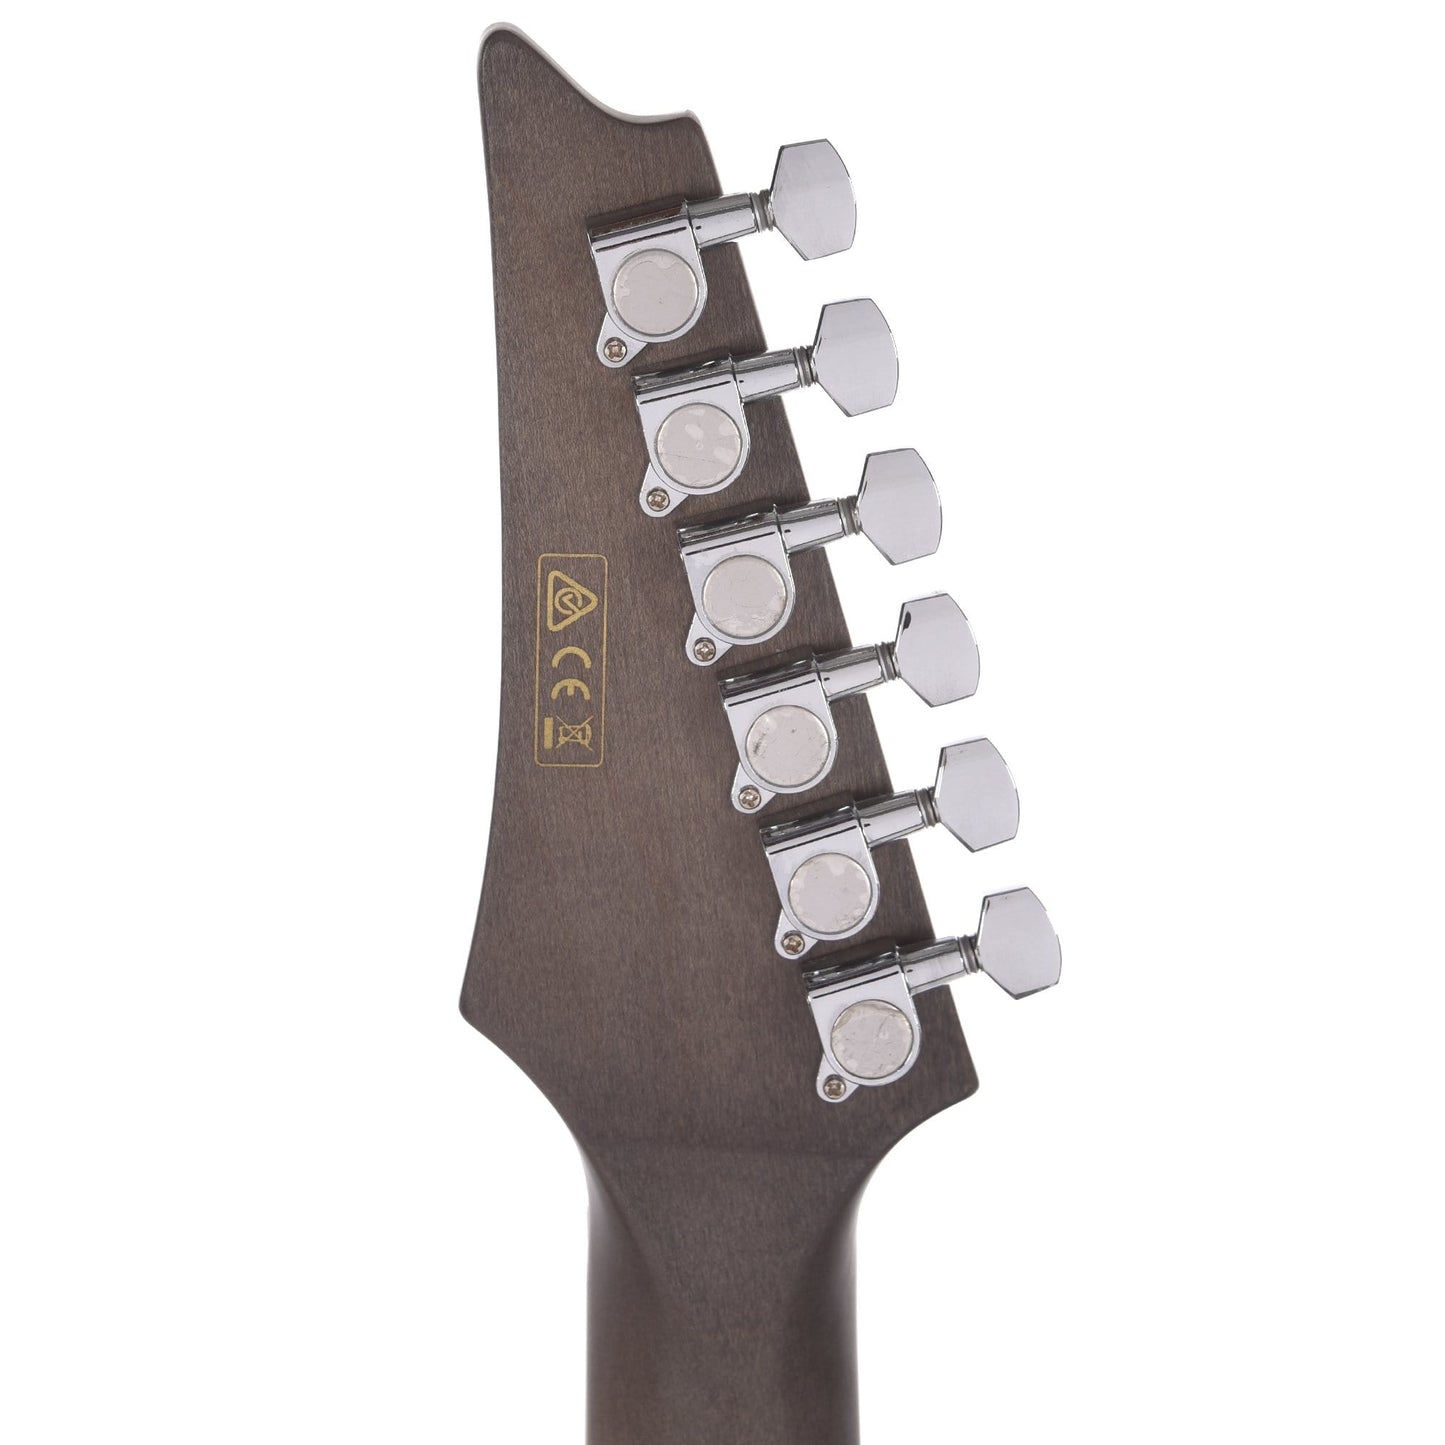 Ibanez ALT30 Altstar Acoustic Guitar Transparent Charcoal Burst High Gloss Acoustic Guitars / Built-in Electronics